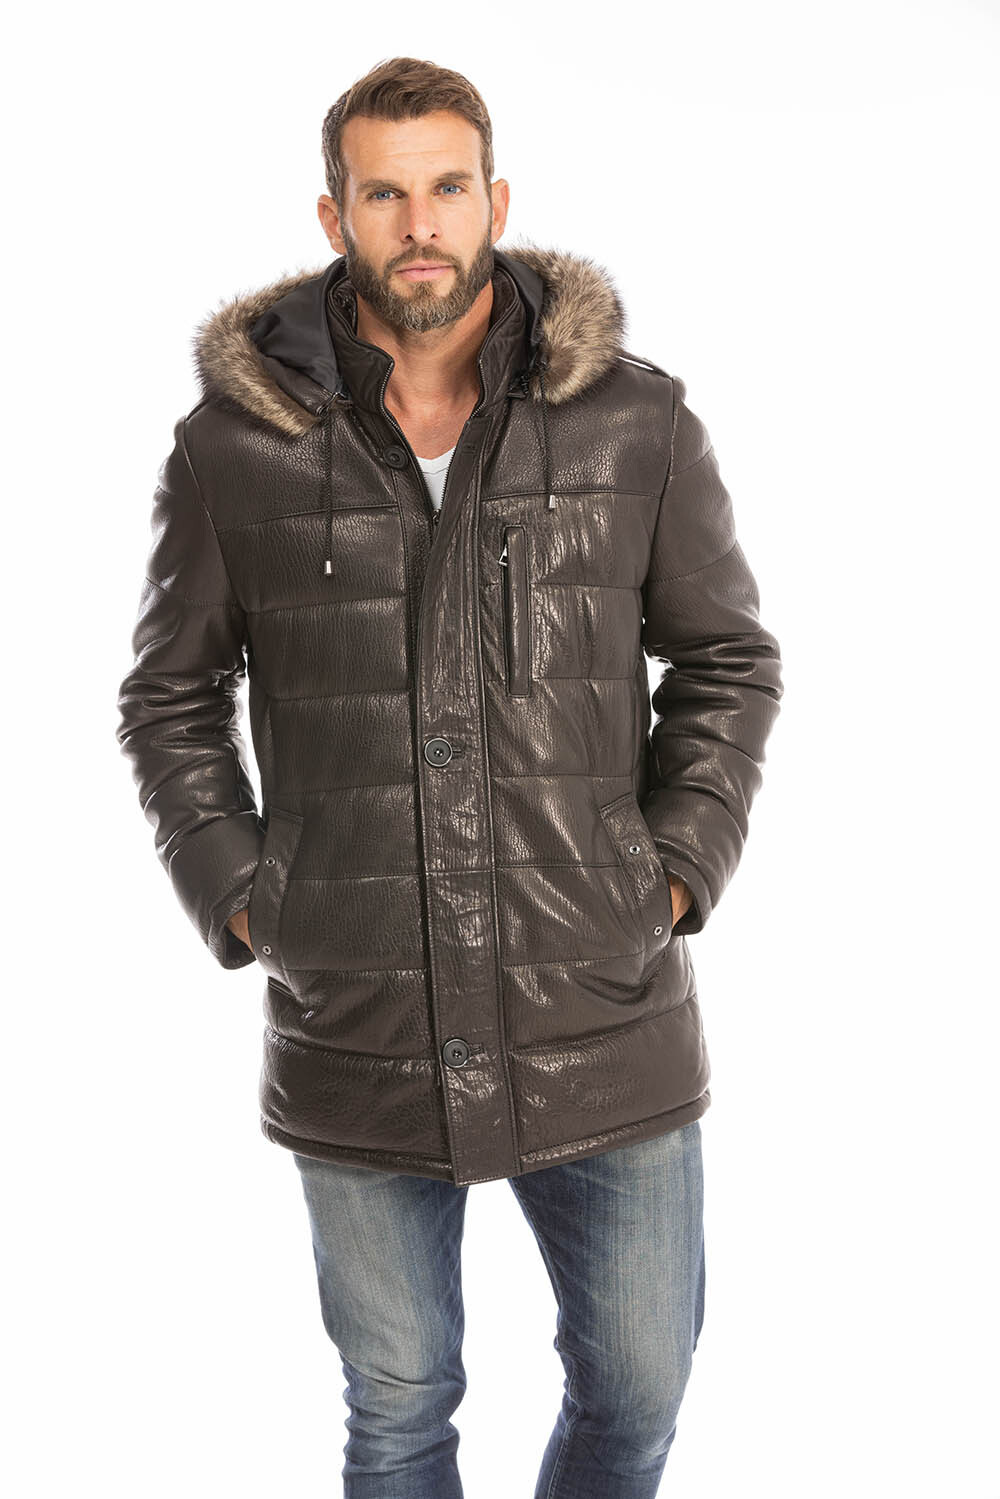 manteau cuir homme noir benji style doudoune (7)